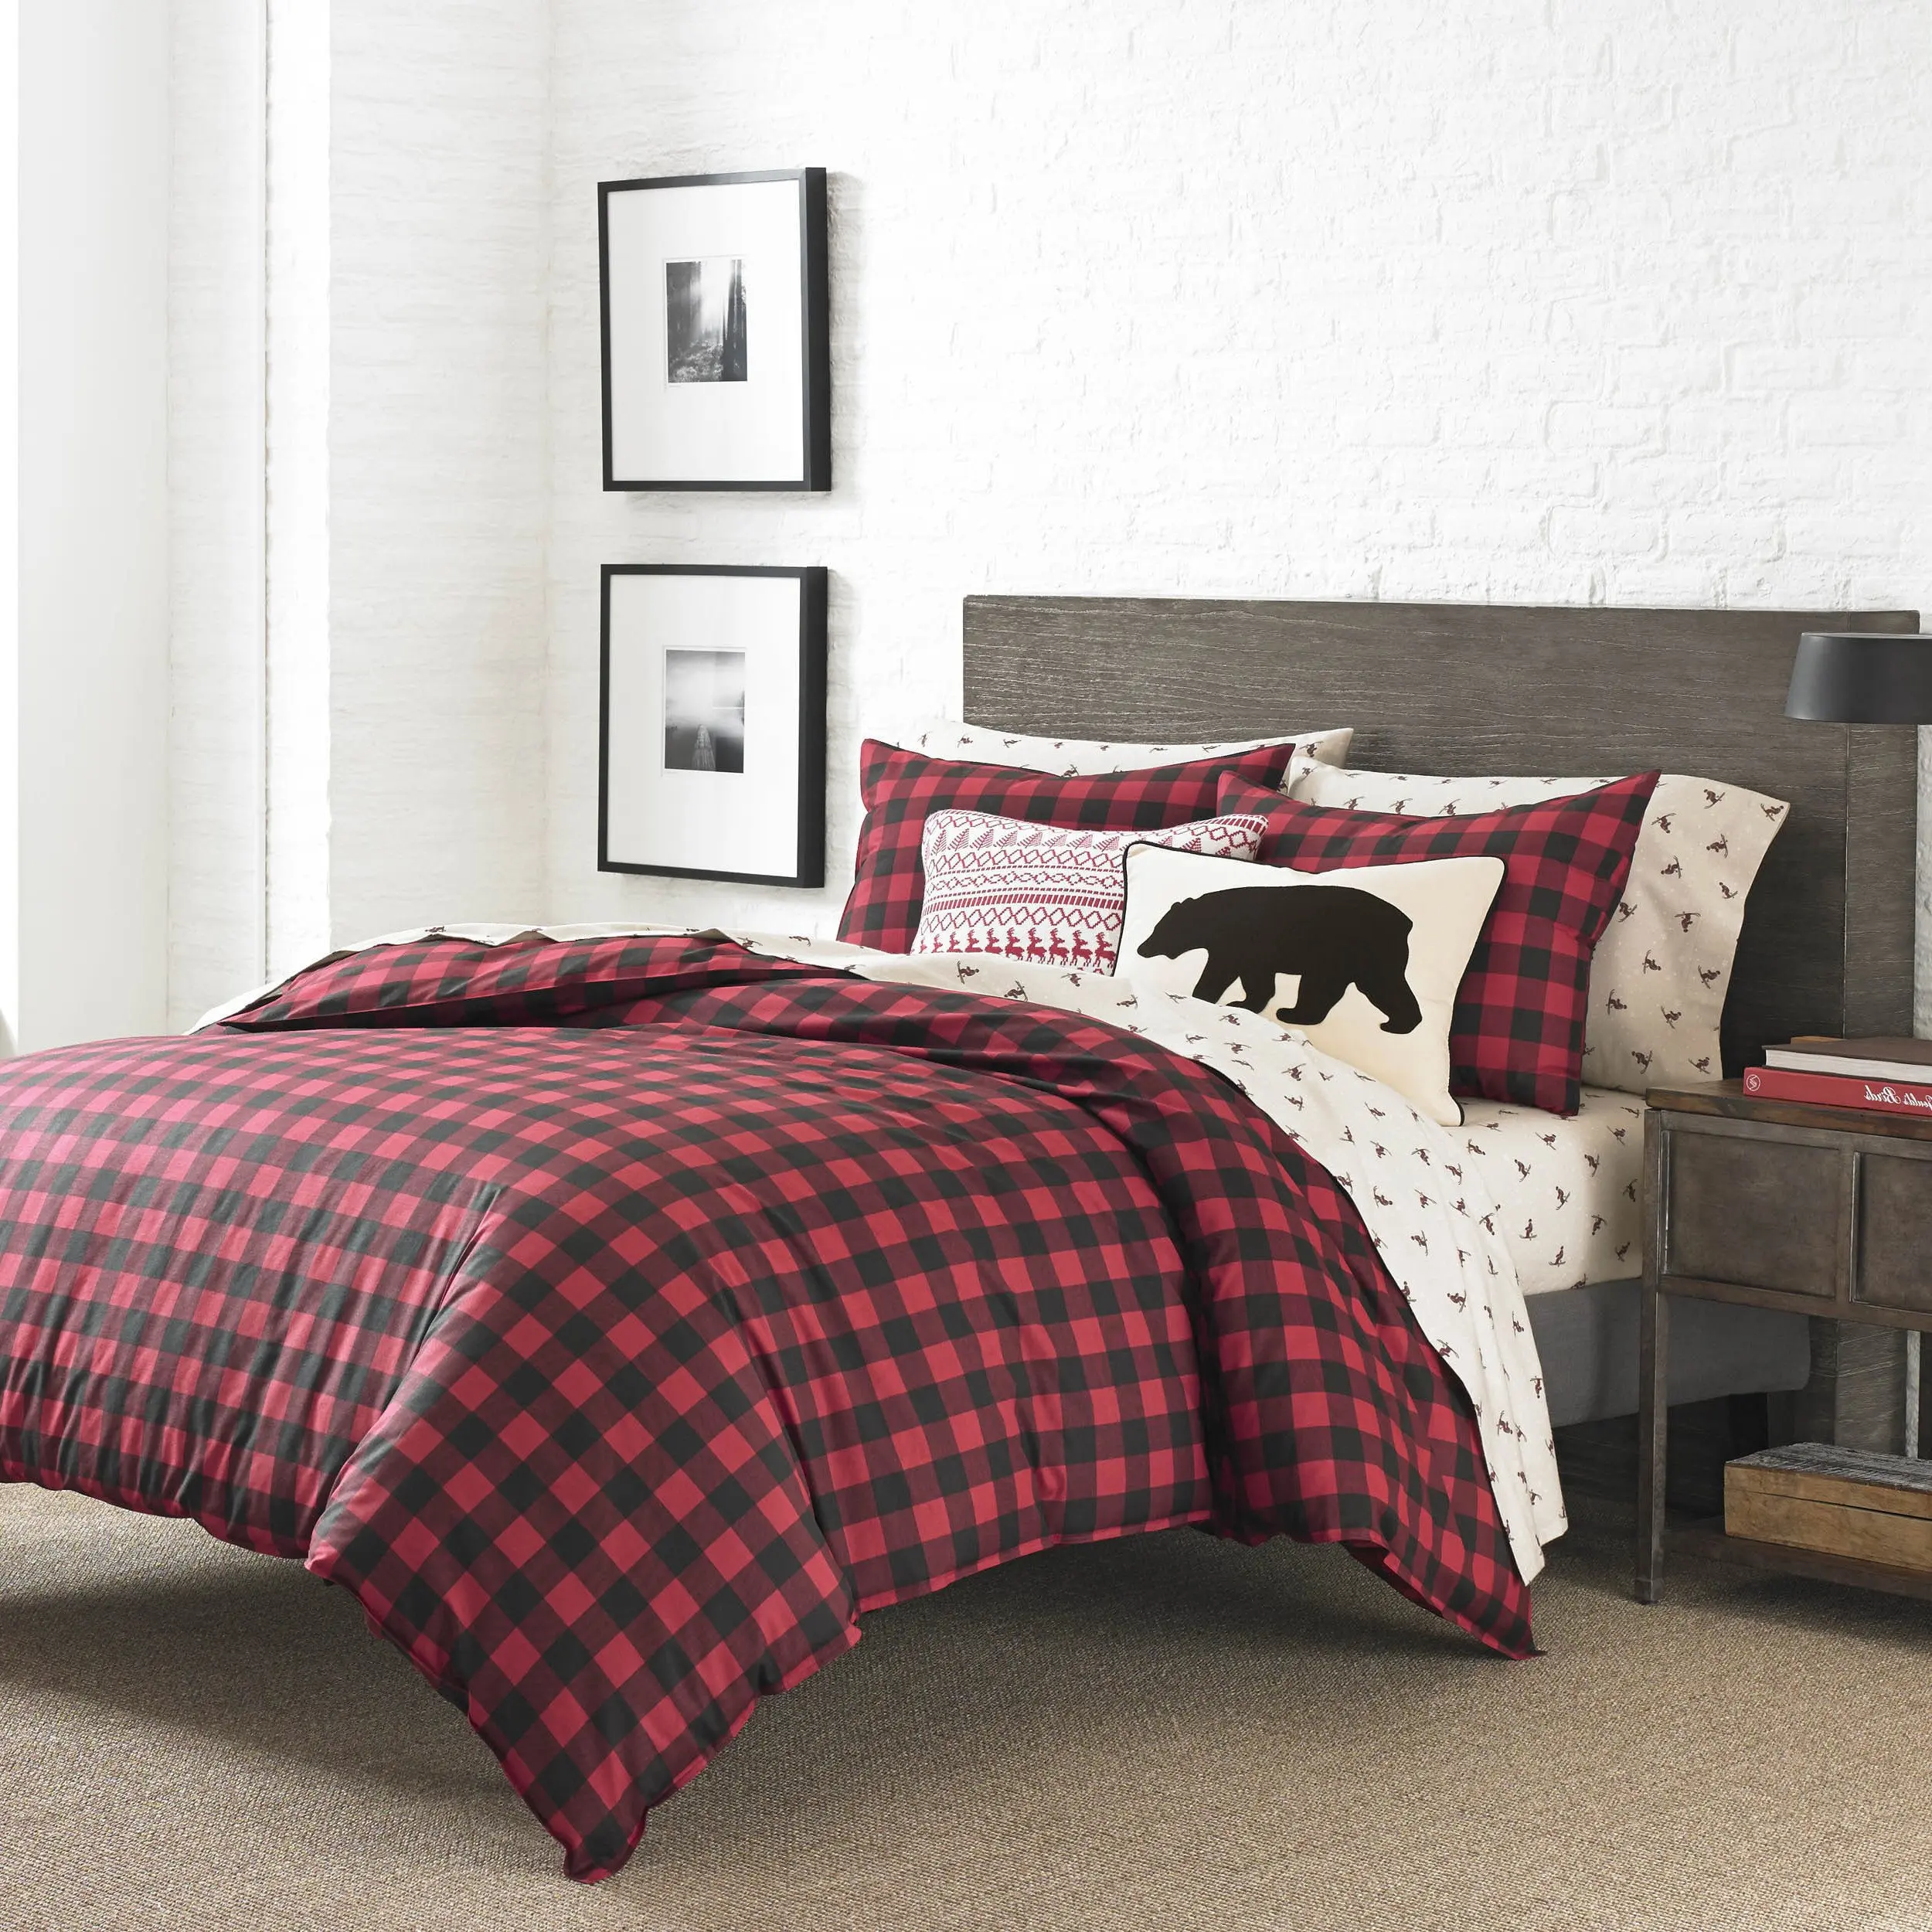 Buy 4pc Red Black Madras Plaid Comforter Twin XL Set ...